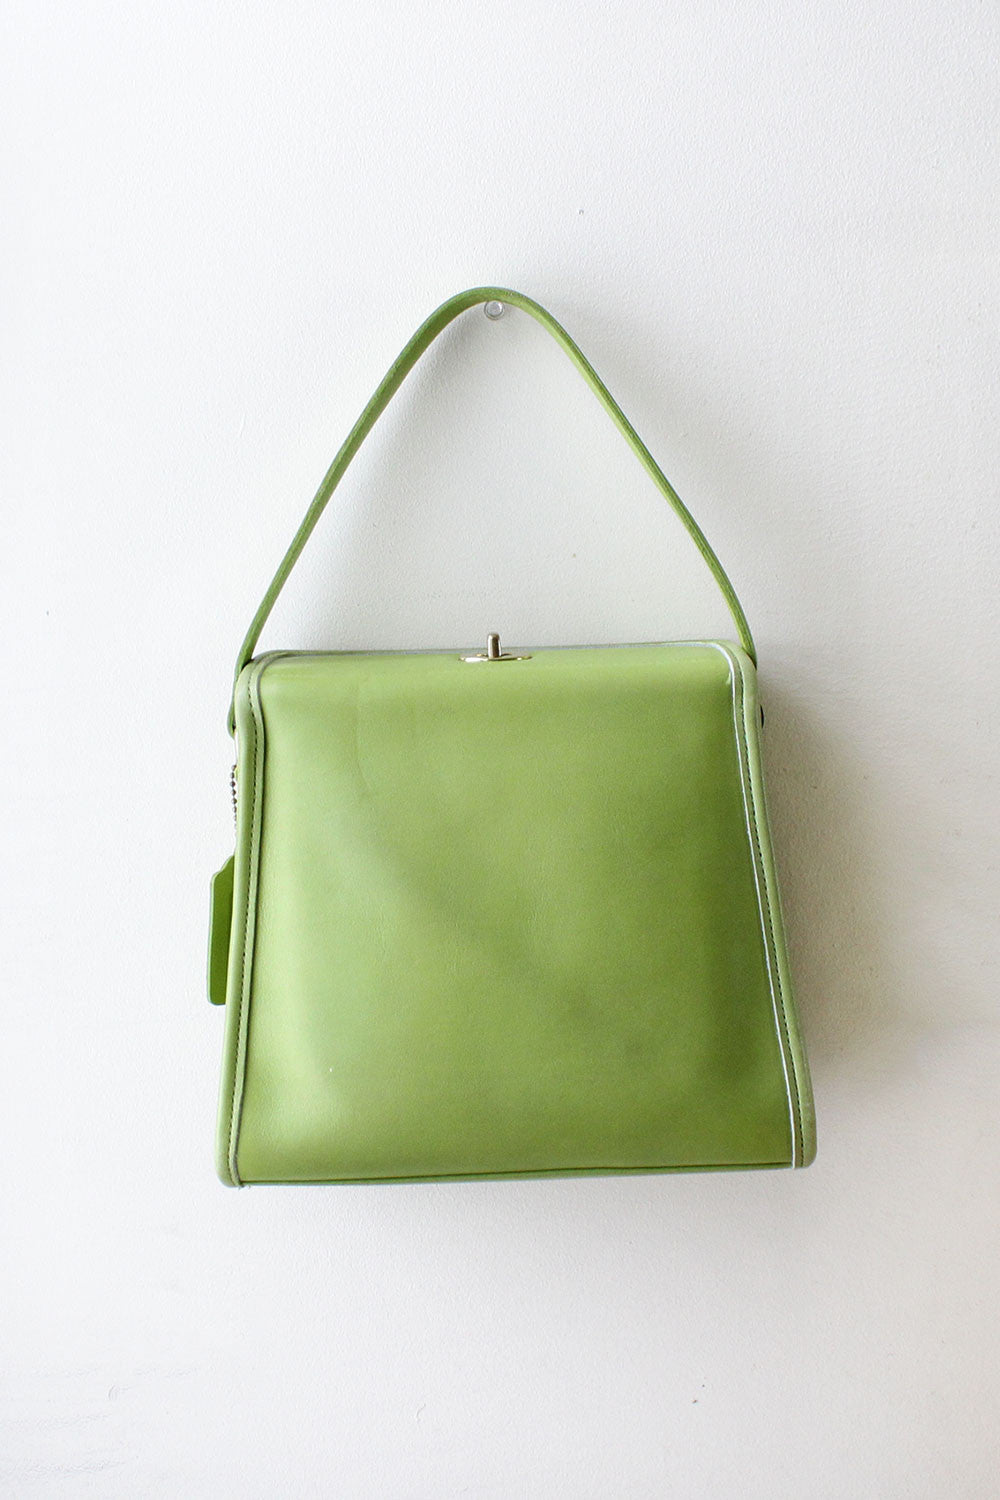 Lime Green Coach Bag 